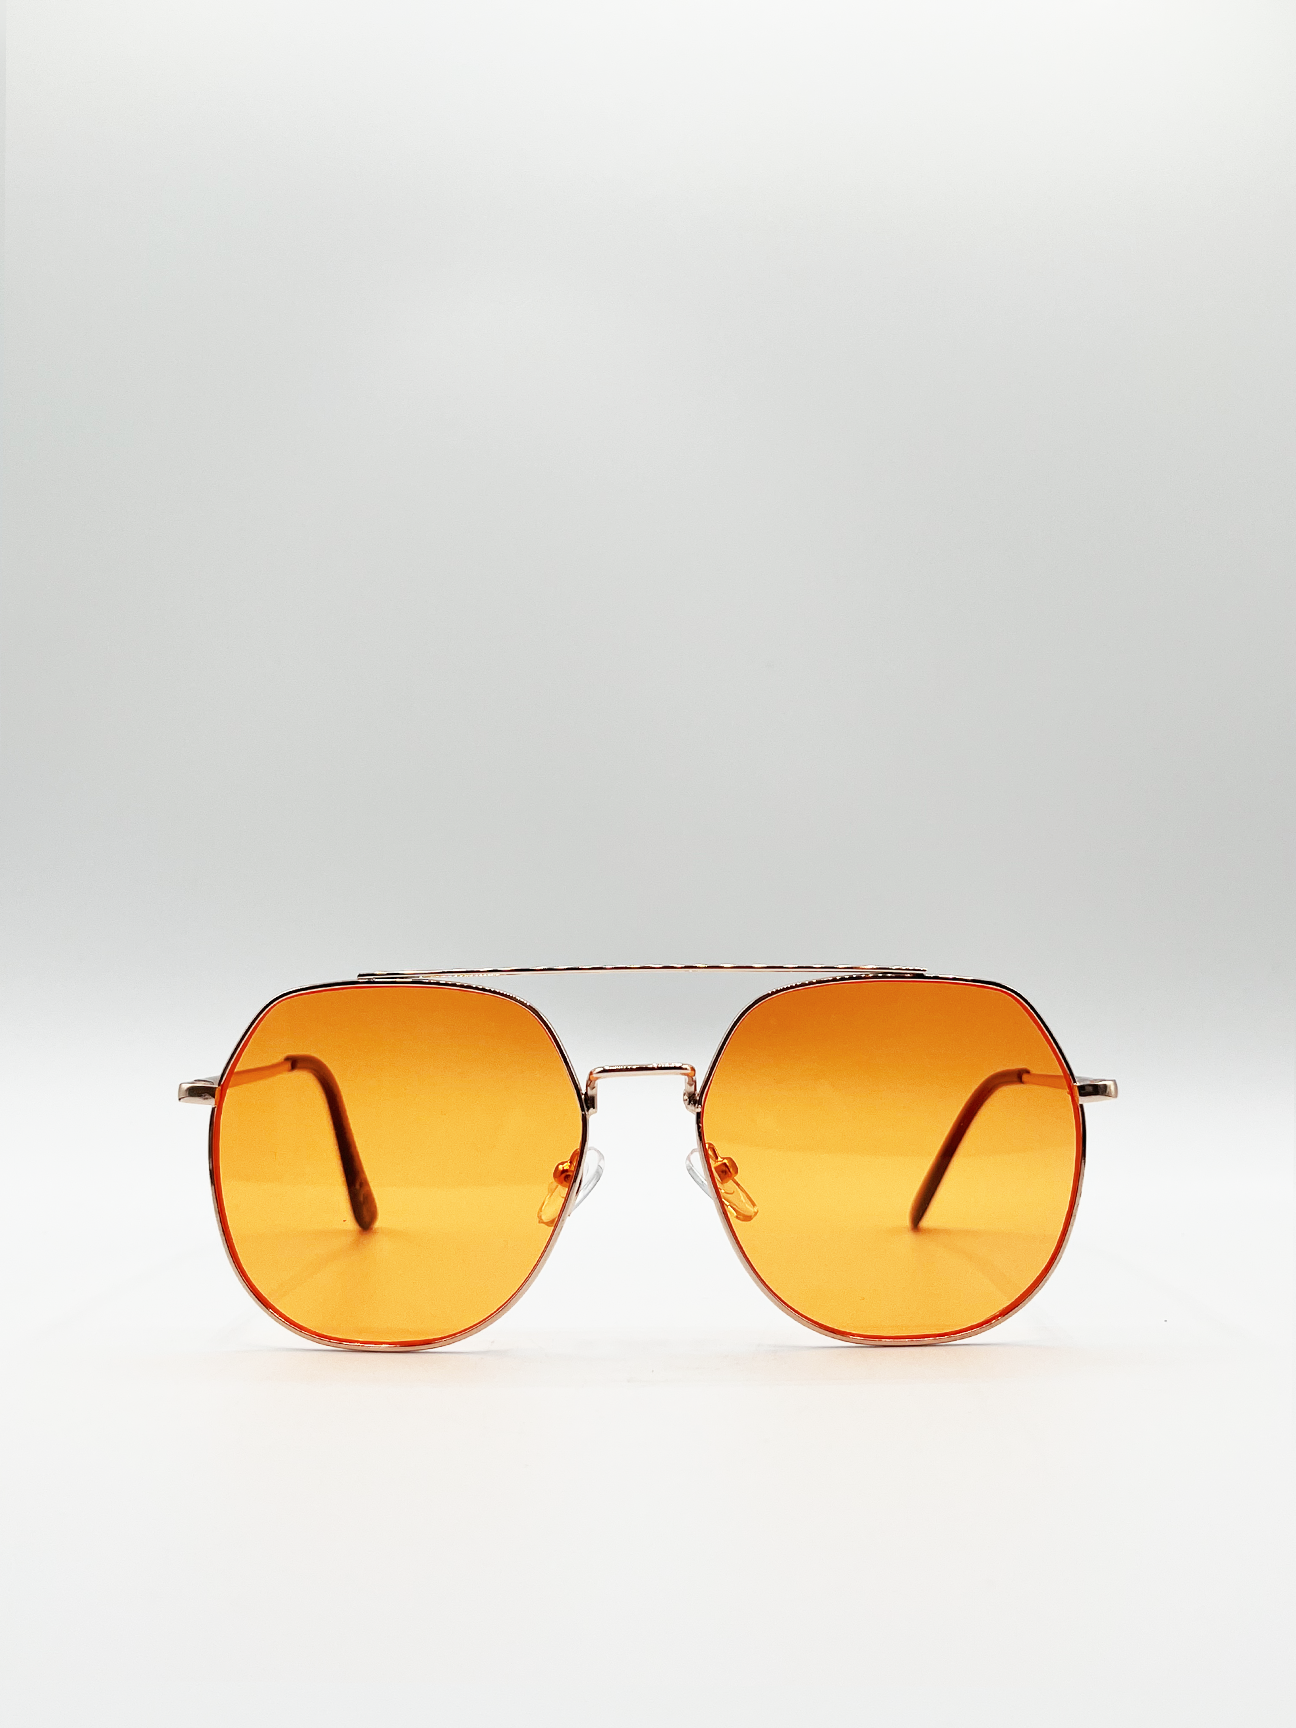 Oversized Aviator Style Sunglasses with Orange Lenses